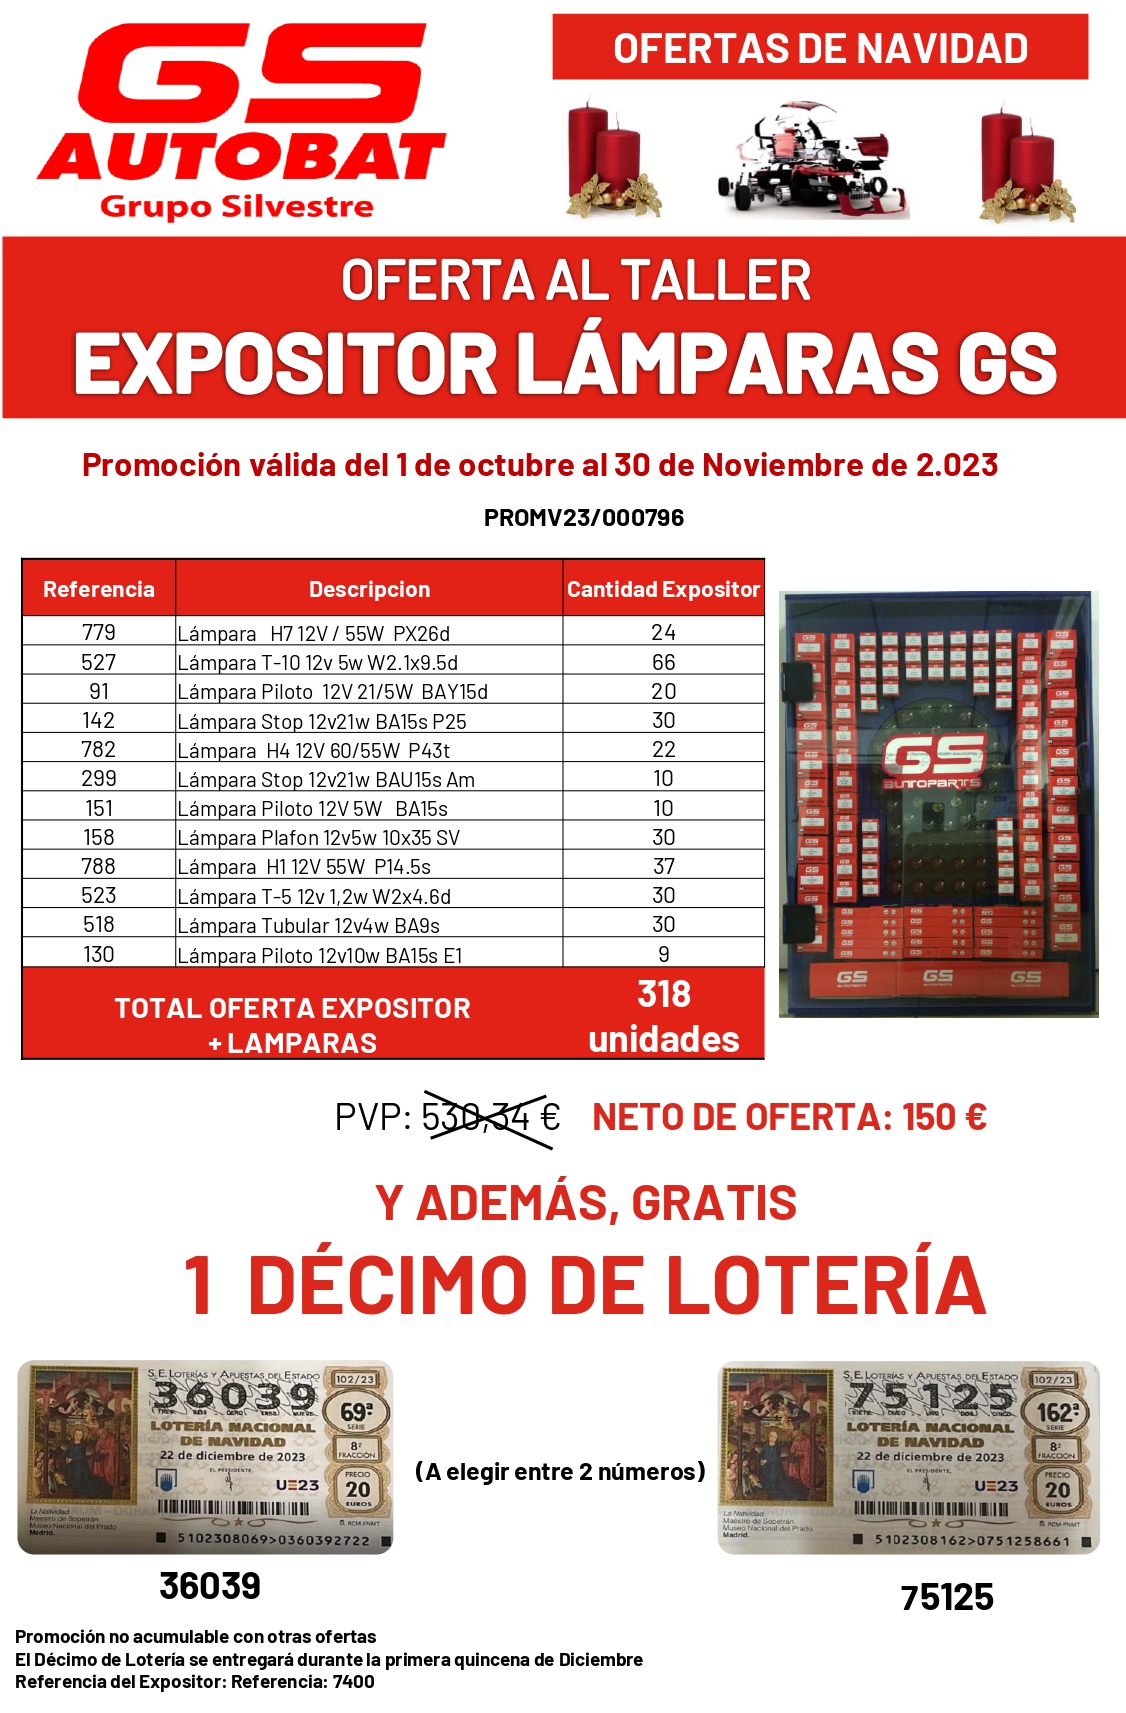 EXPOSITOR LÁMPARAS GS